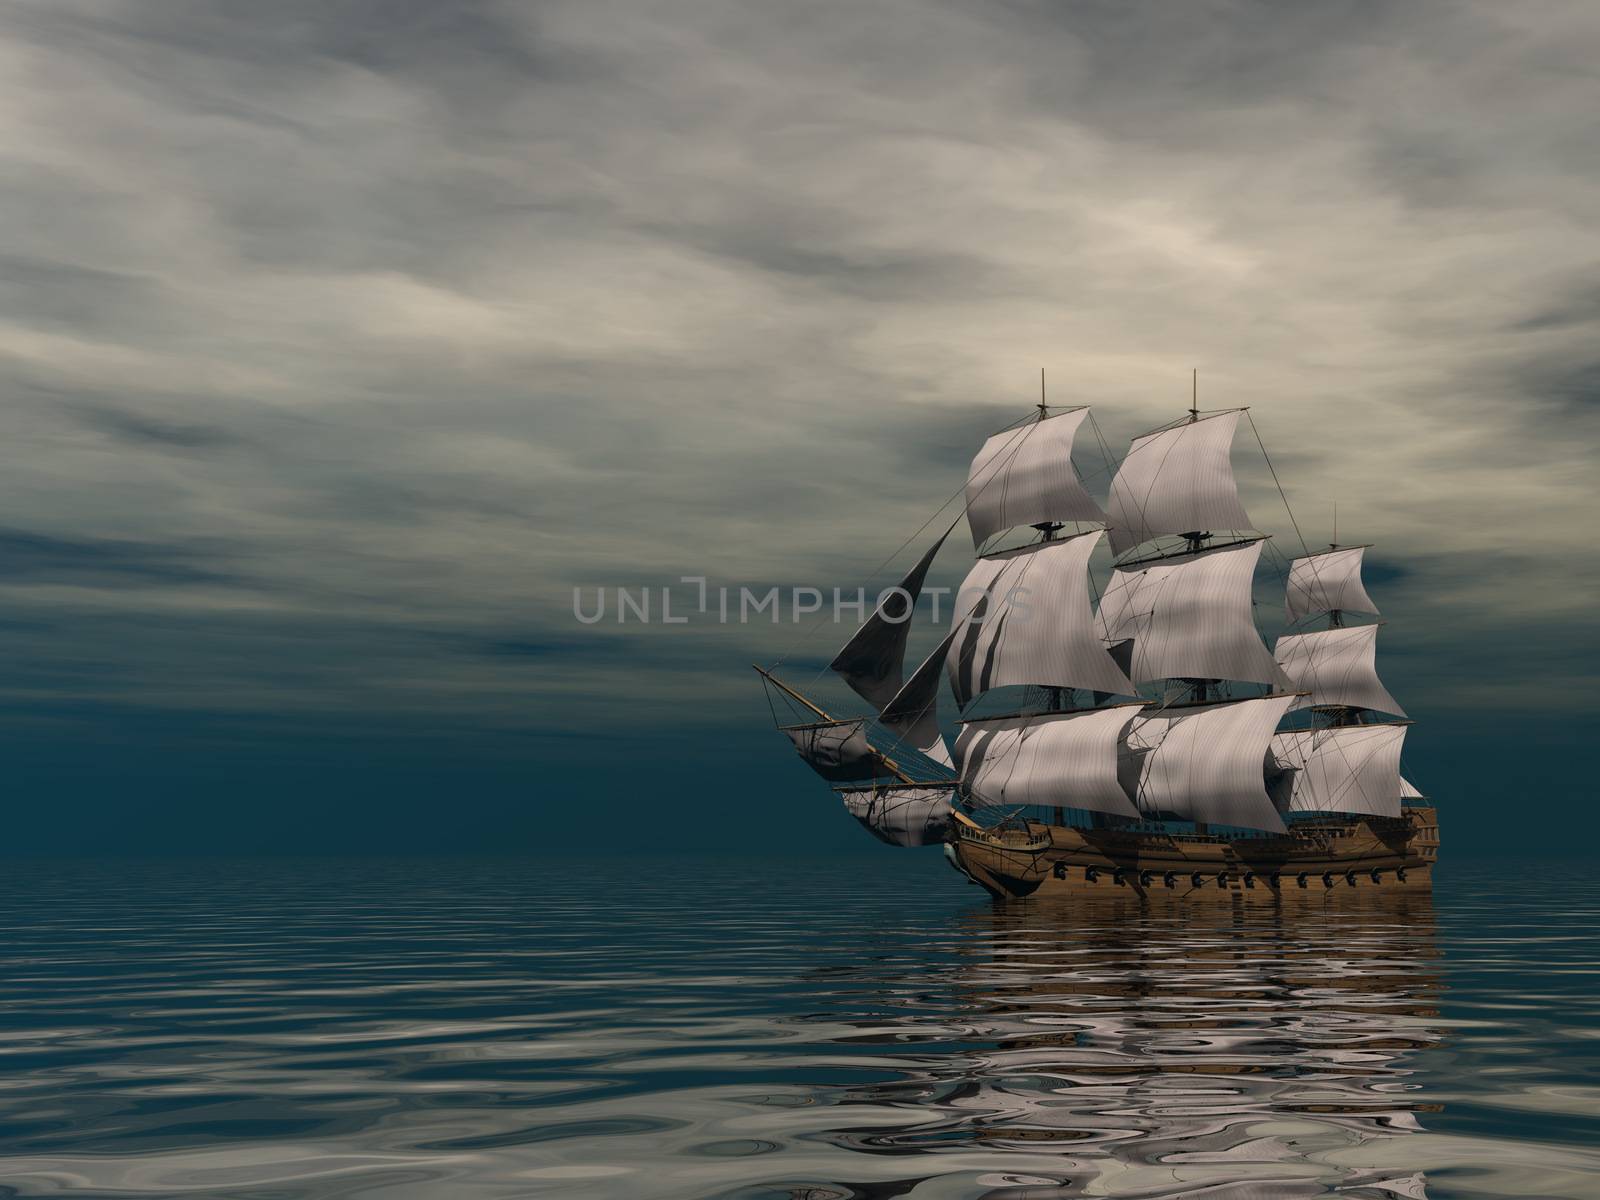 Old merchant ship on the ocean - 3D render by Elenaphotos21